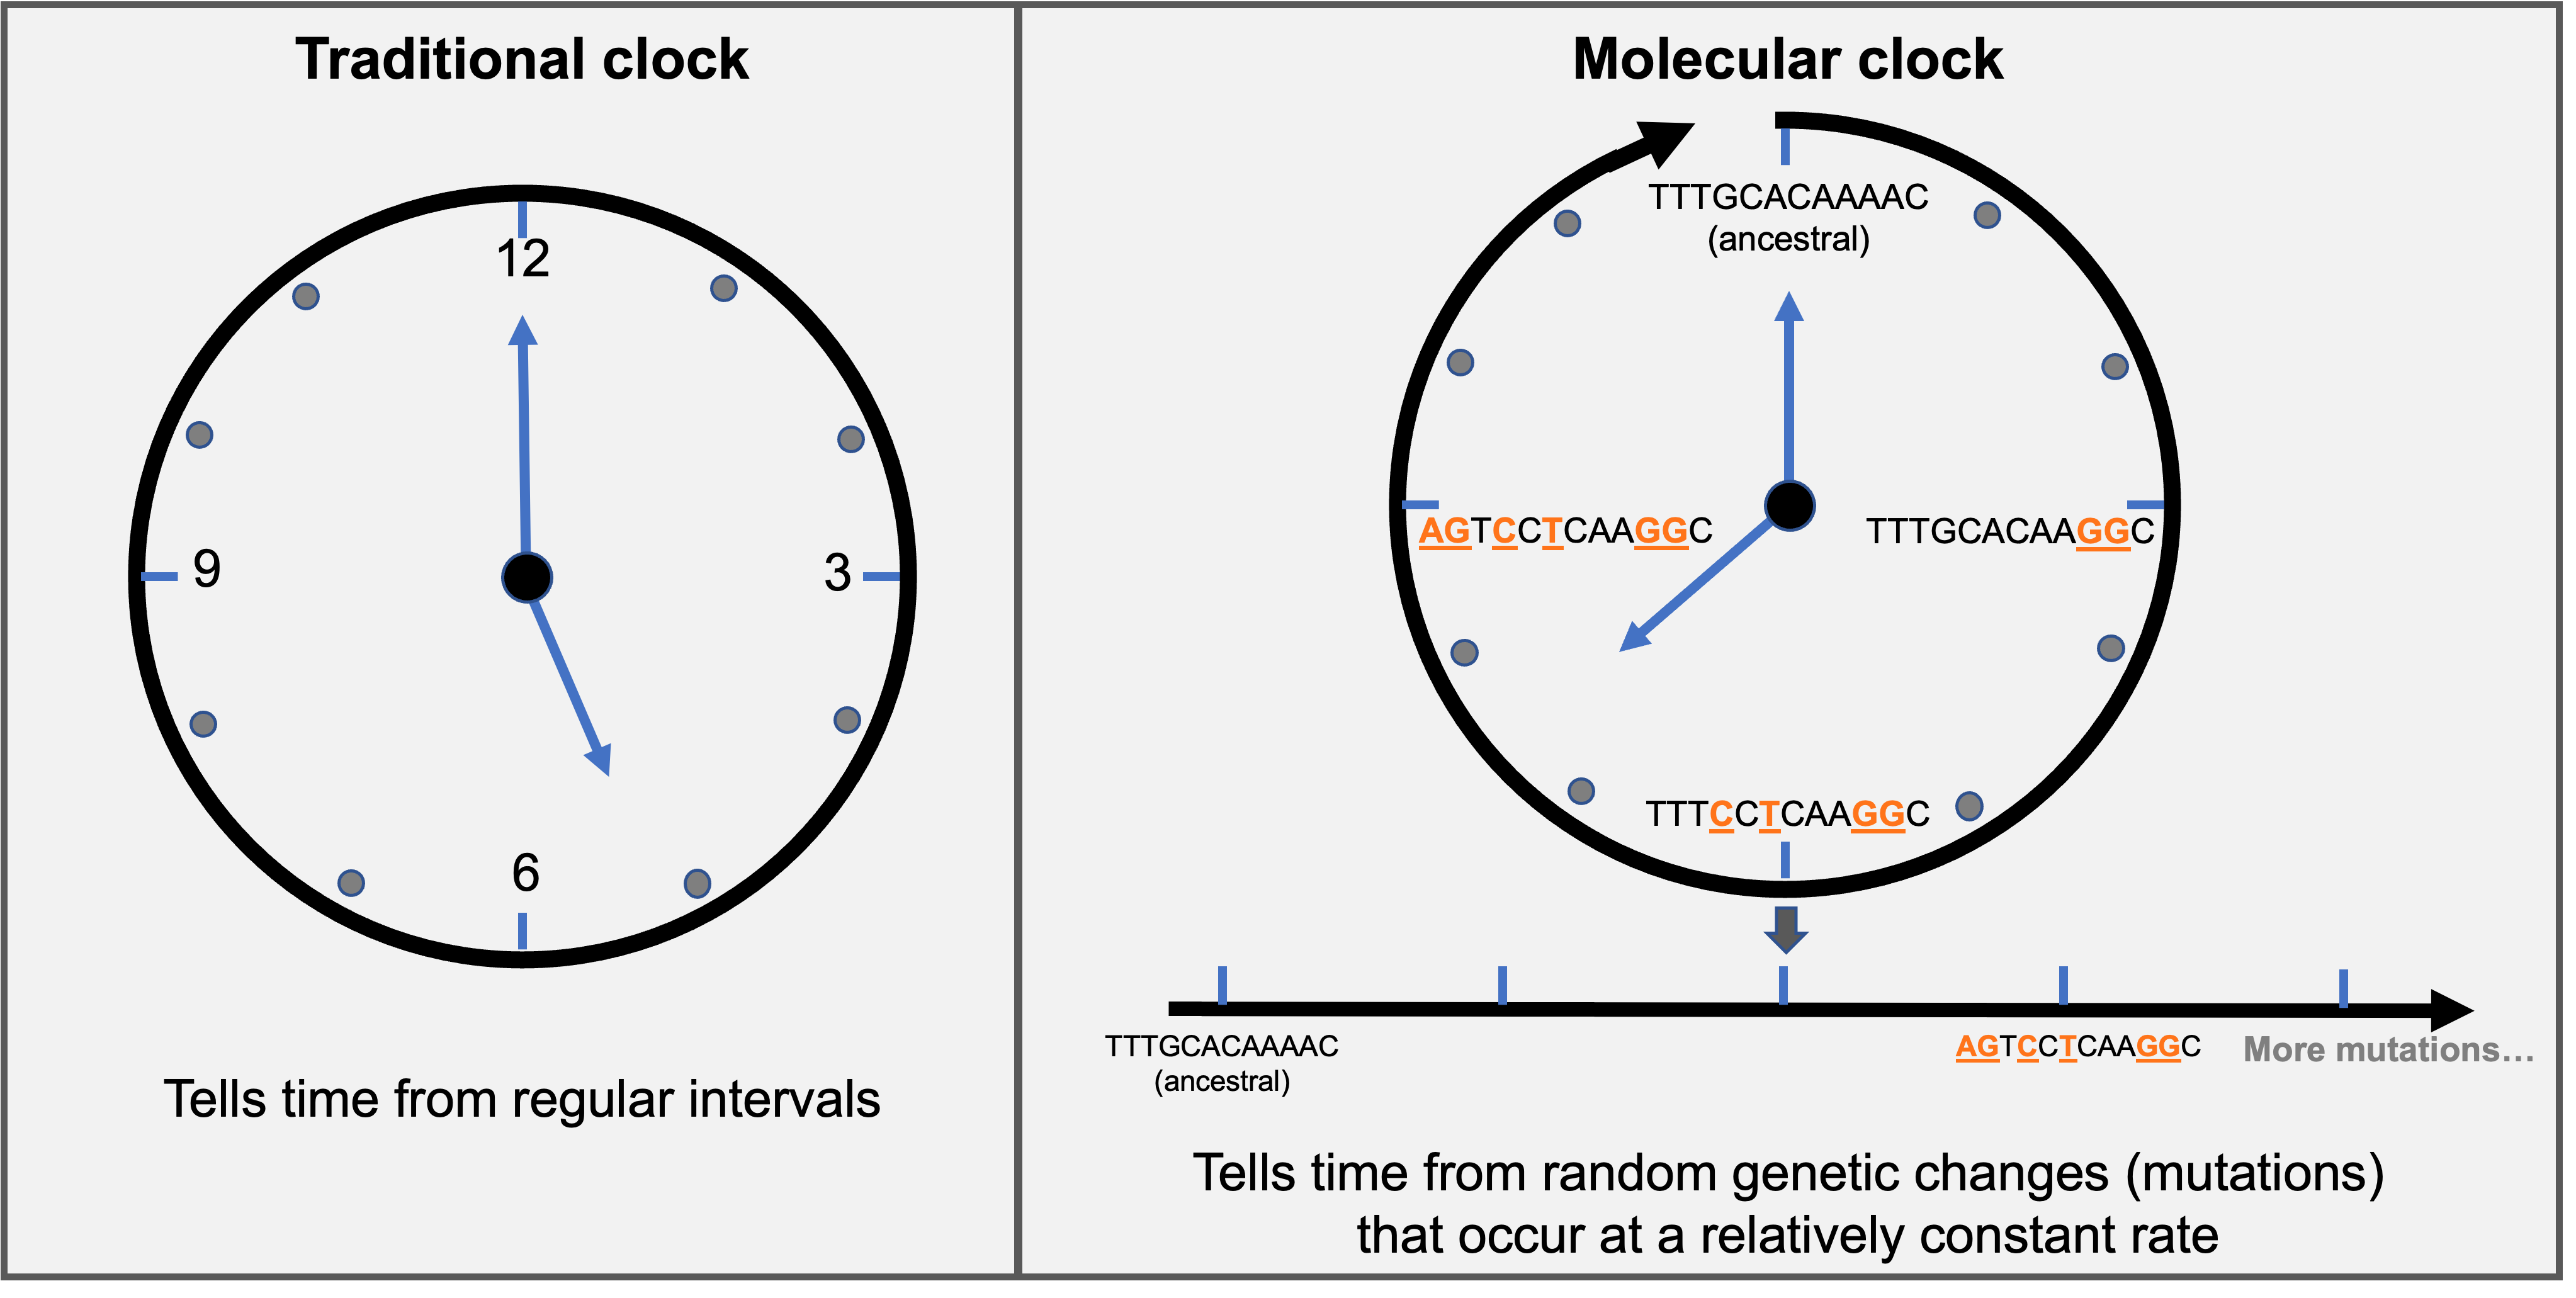 MolecularClock_Schematic.png